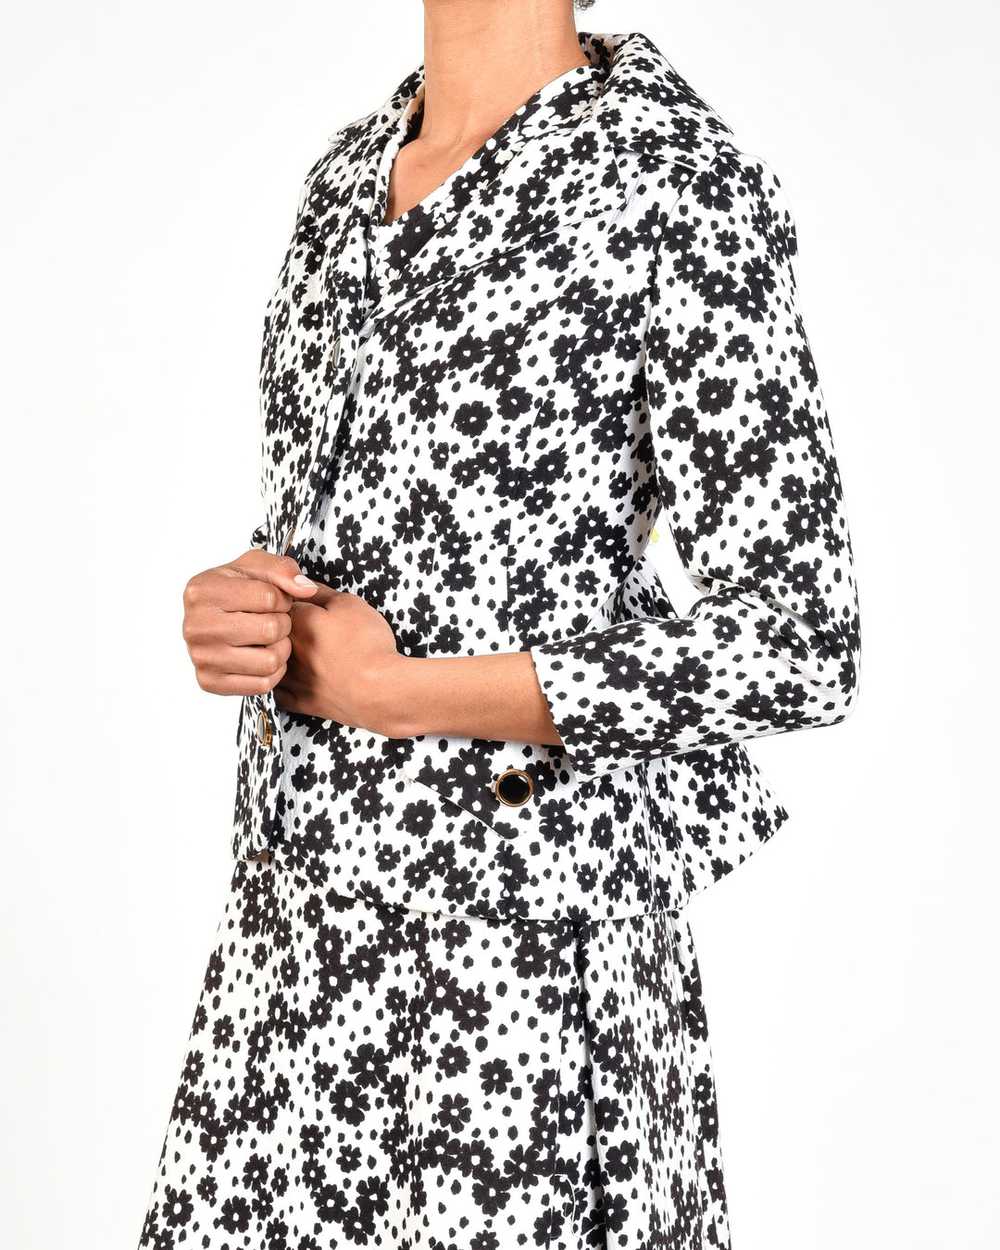 Pauline 60s Daisy Print Dress + Jacket - image 6